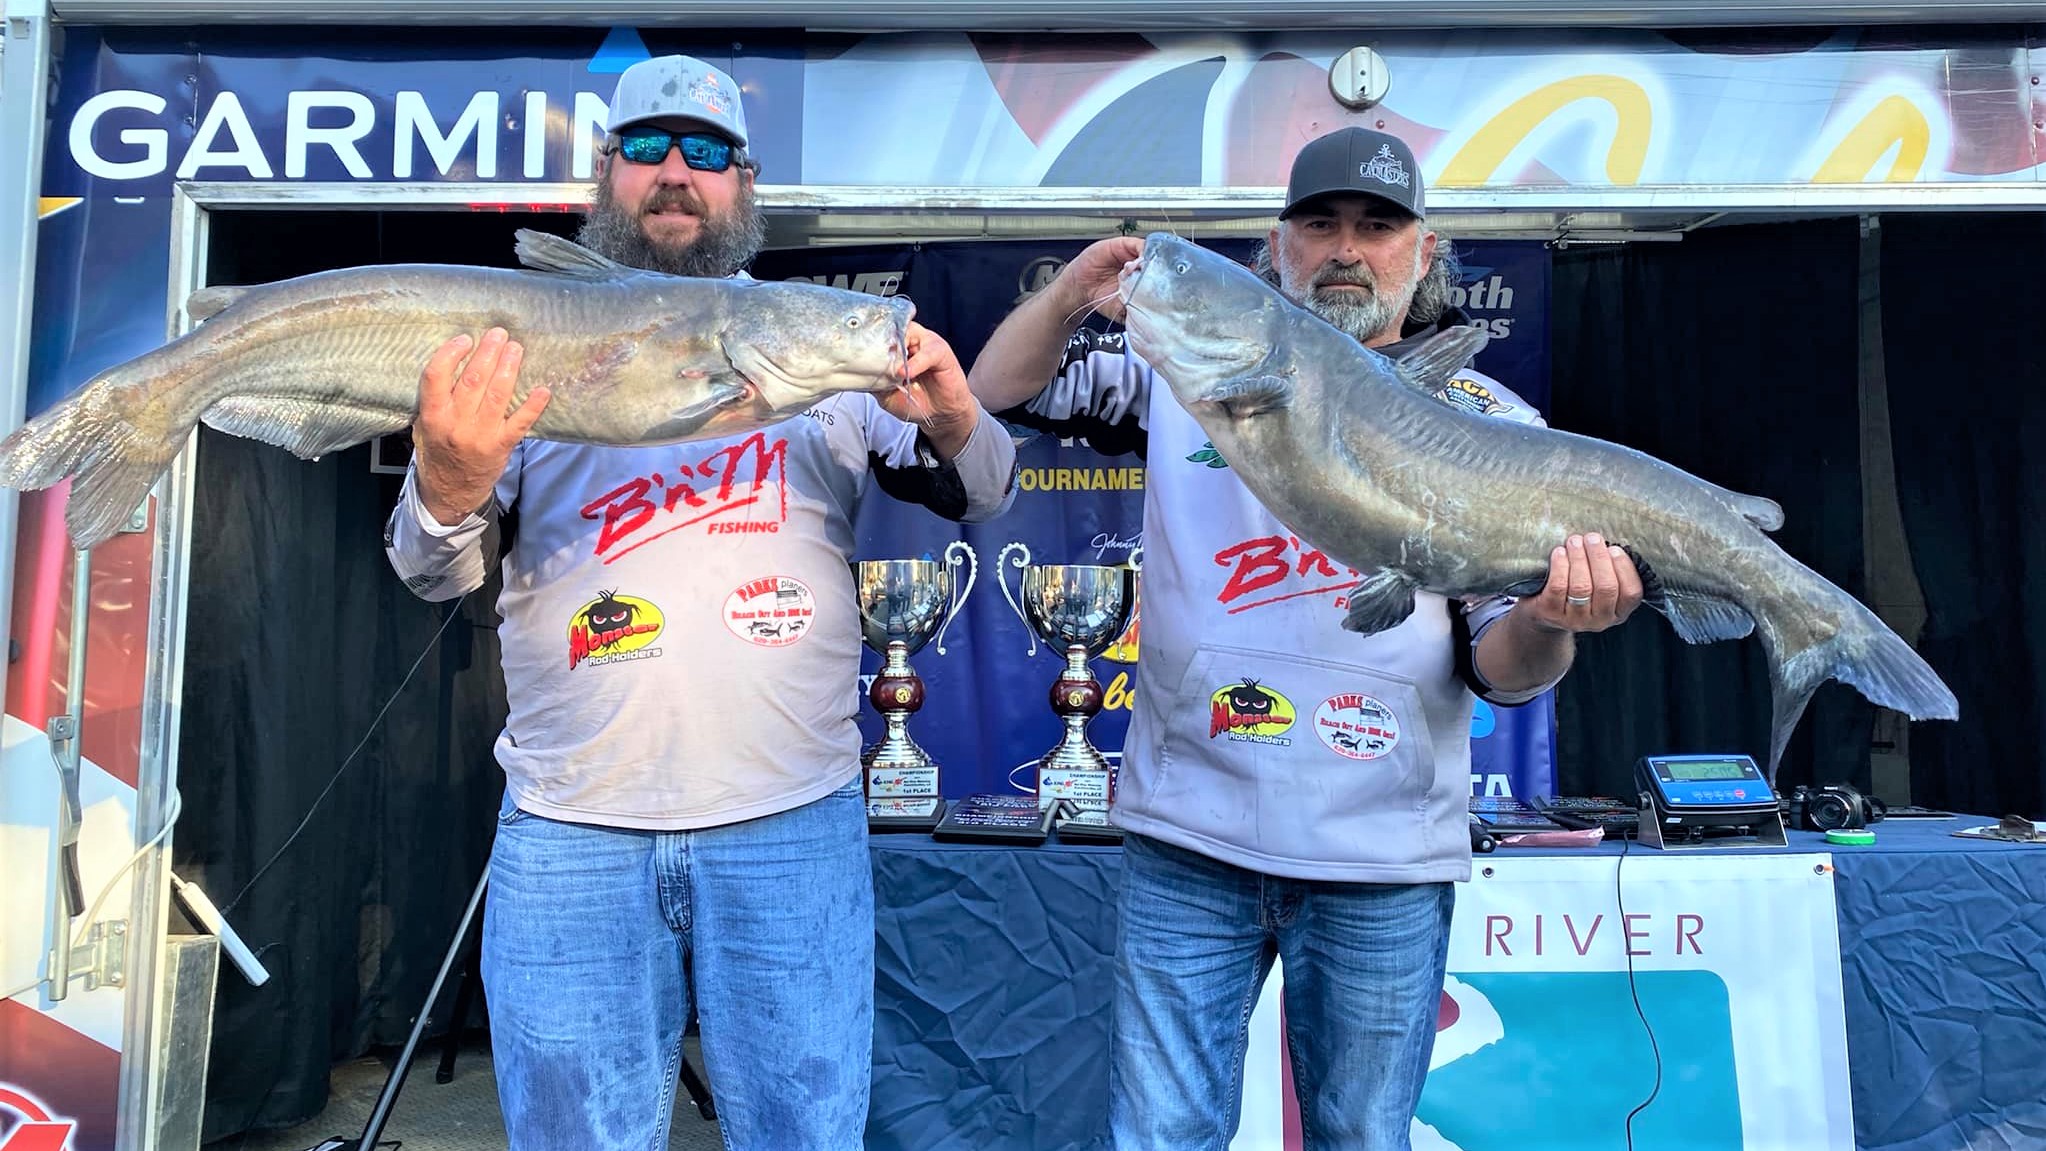 Kansas fishing couple wins national catfish tournament